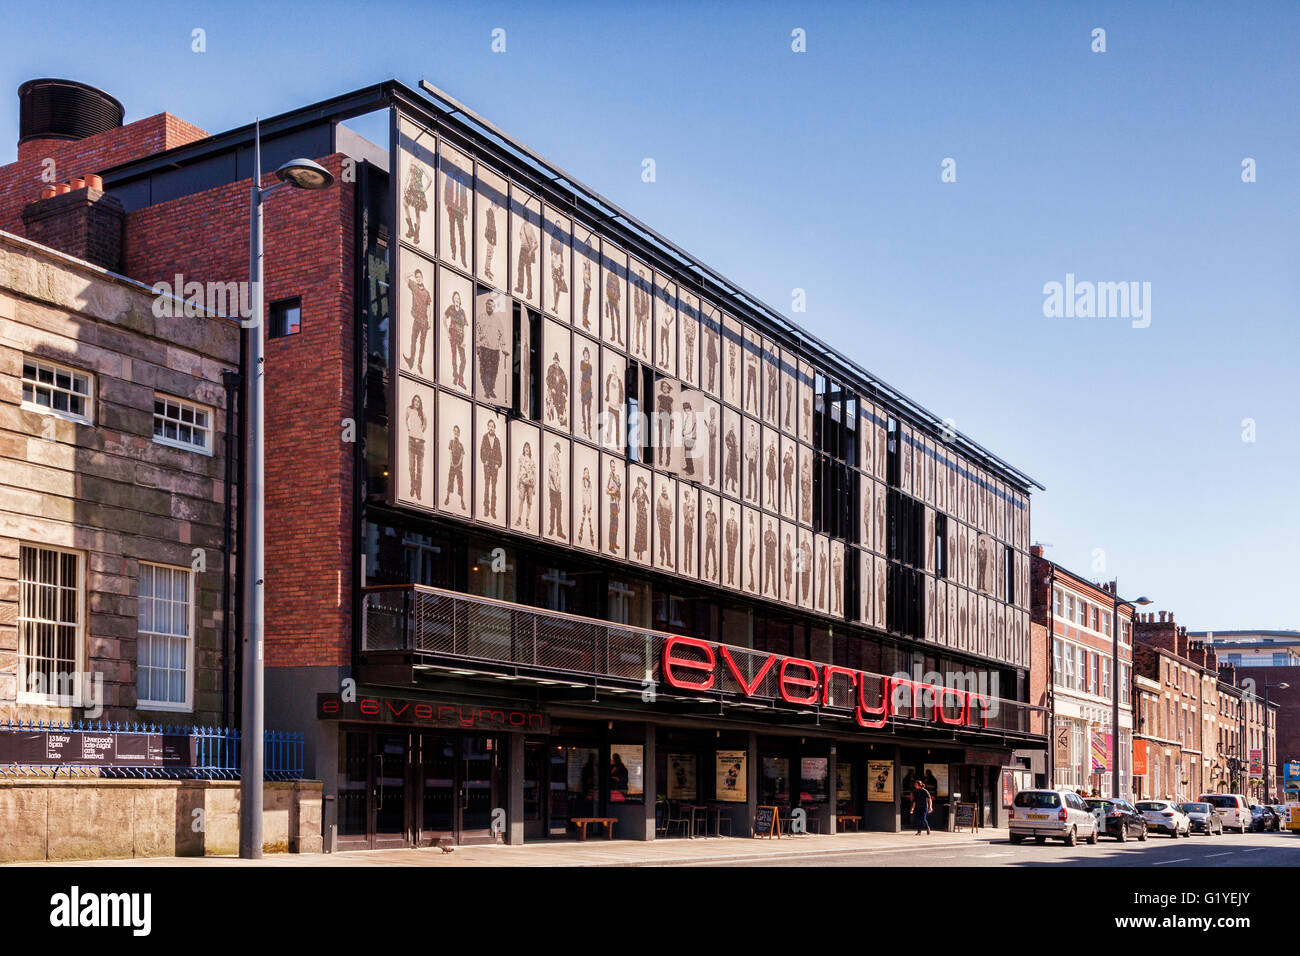 Théâtre Everyman, Williamson Square, Liverpool, Angleterre, Royaume-Uni Banque D'Images